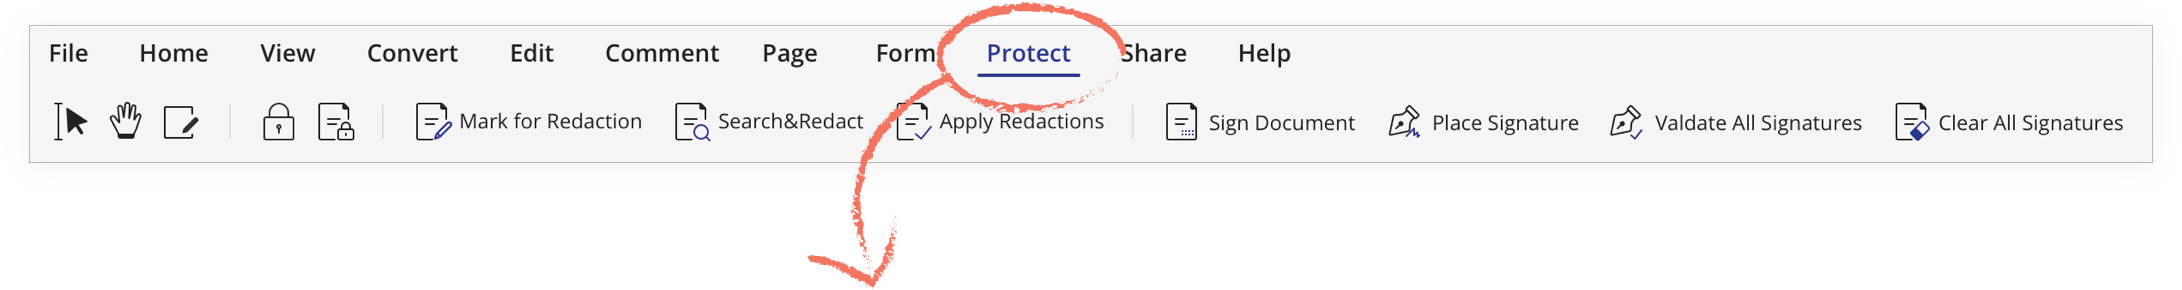 protect pdf icon